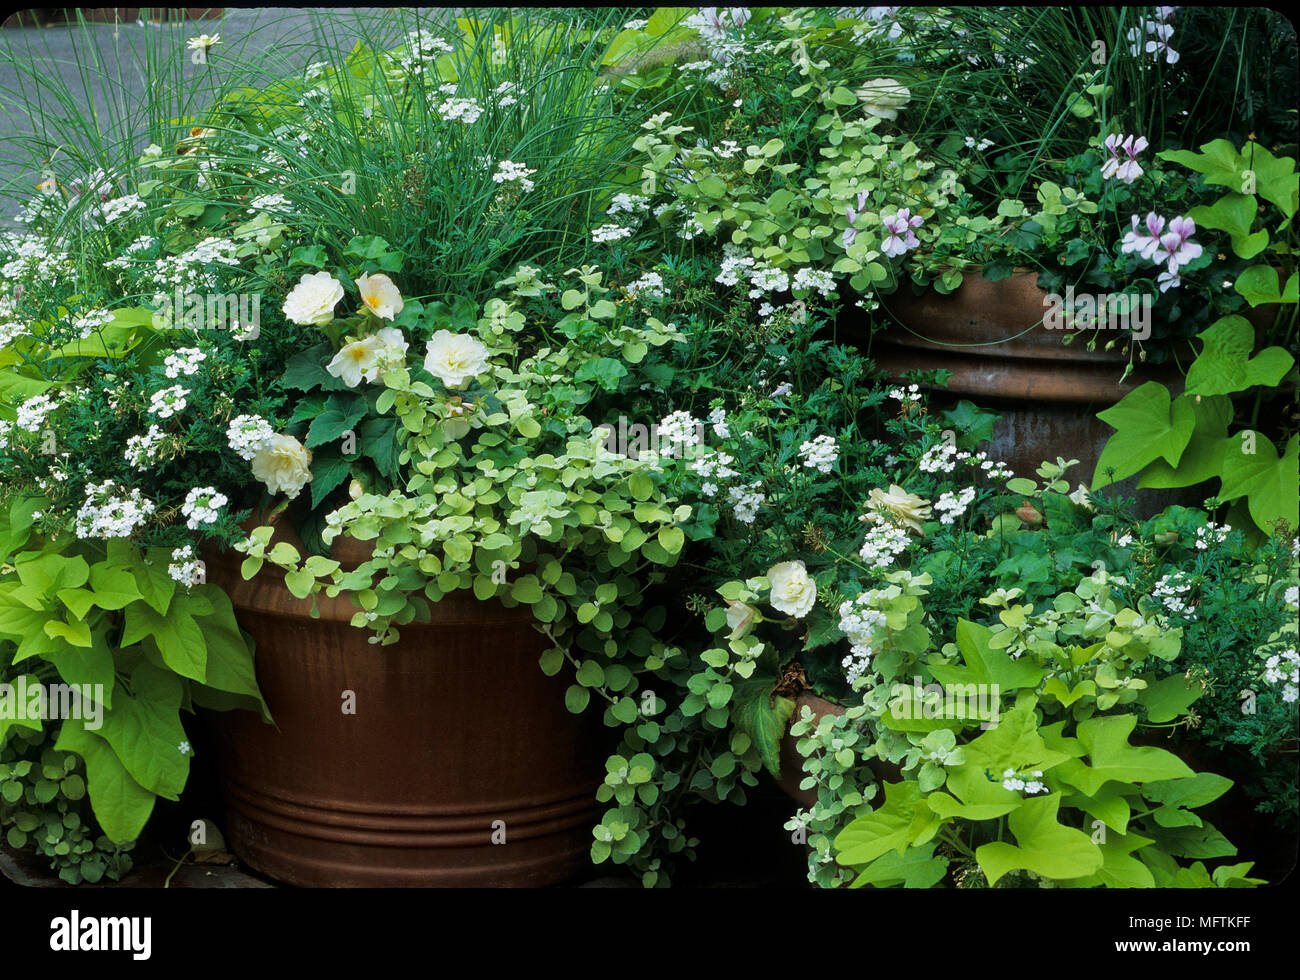 Containers with plantings of Helichrysum petiolare 'Limelight', Begonia, Pennisetum, Verbena x hybrida 'Babylon White' and Ipomoea batatas 'Margarita' Stock Photo